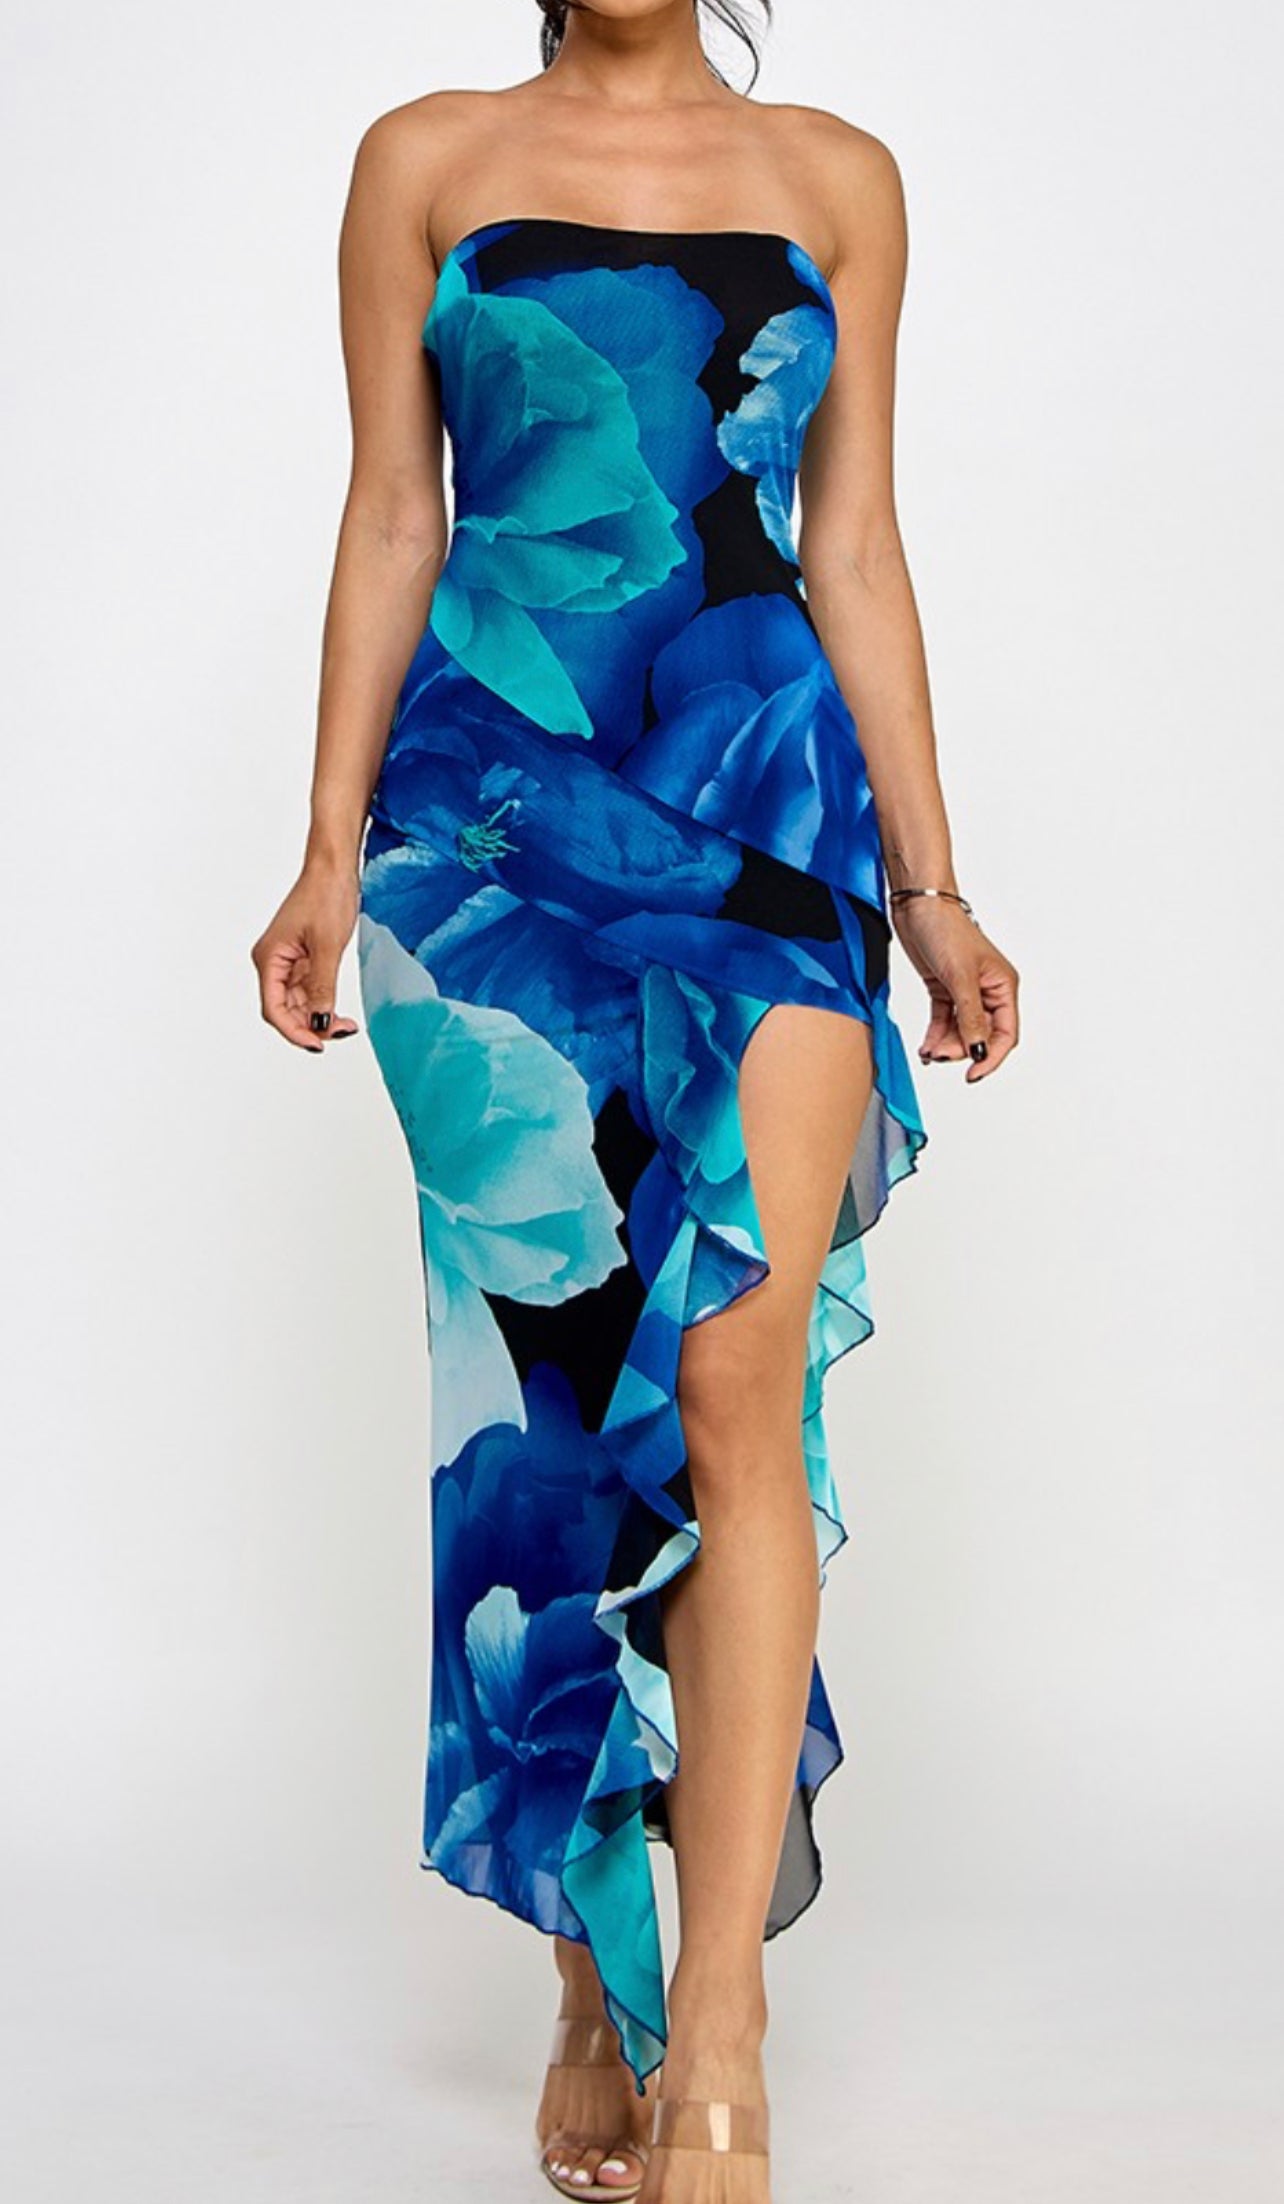 Briana flower print mesh dress - Blue